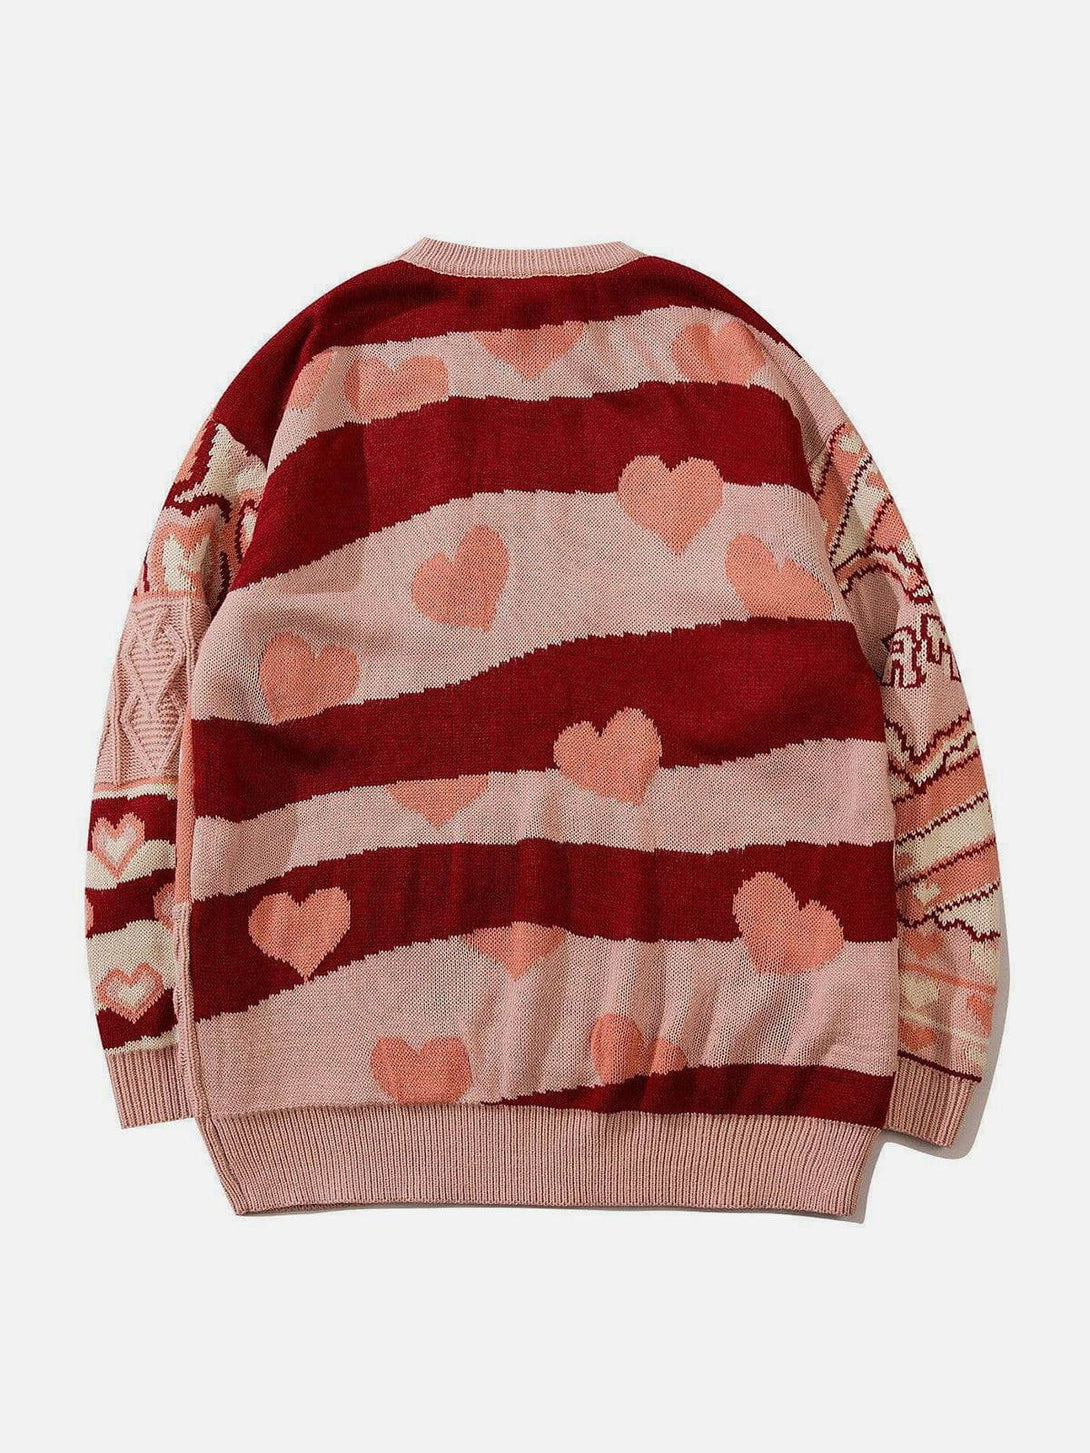 Levefly - Love Weaving Knit Sweater - Streetwear Fashion - levefly.com